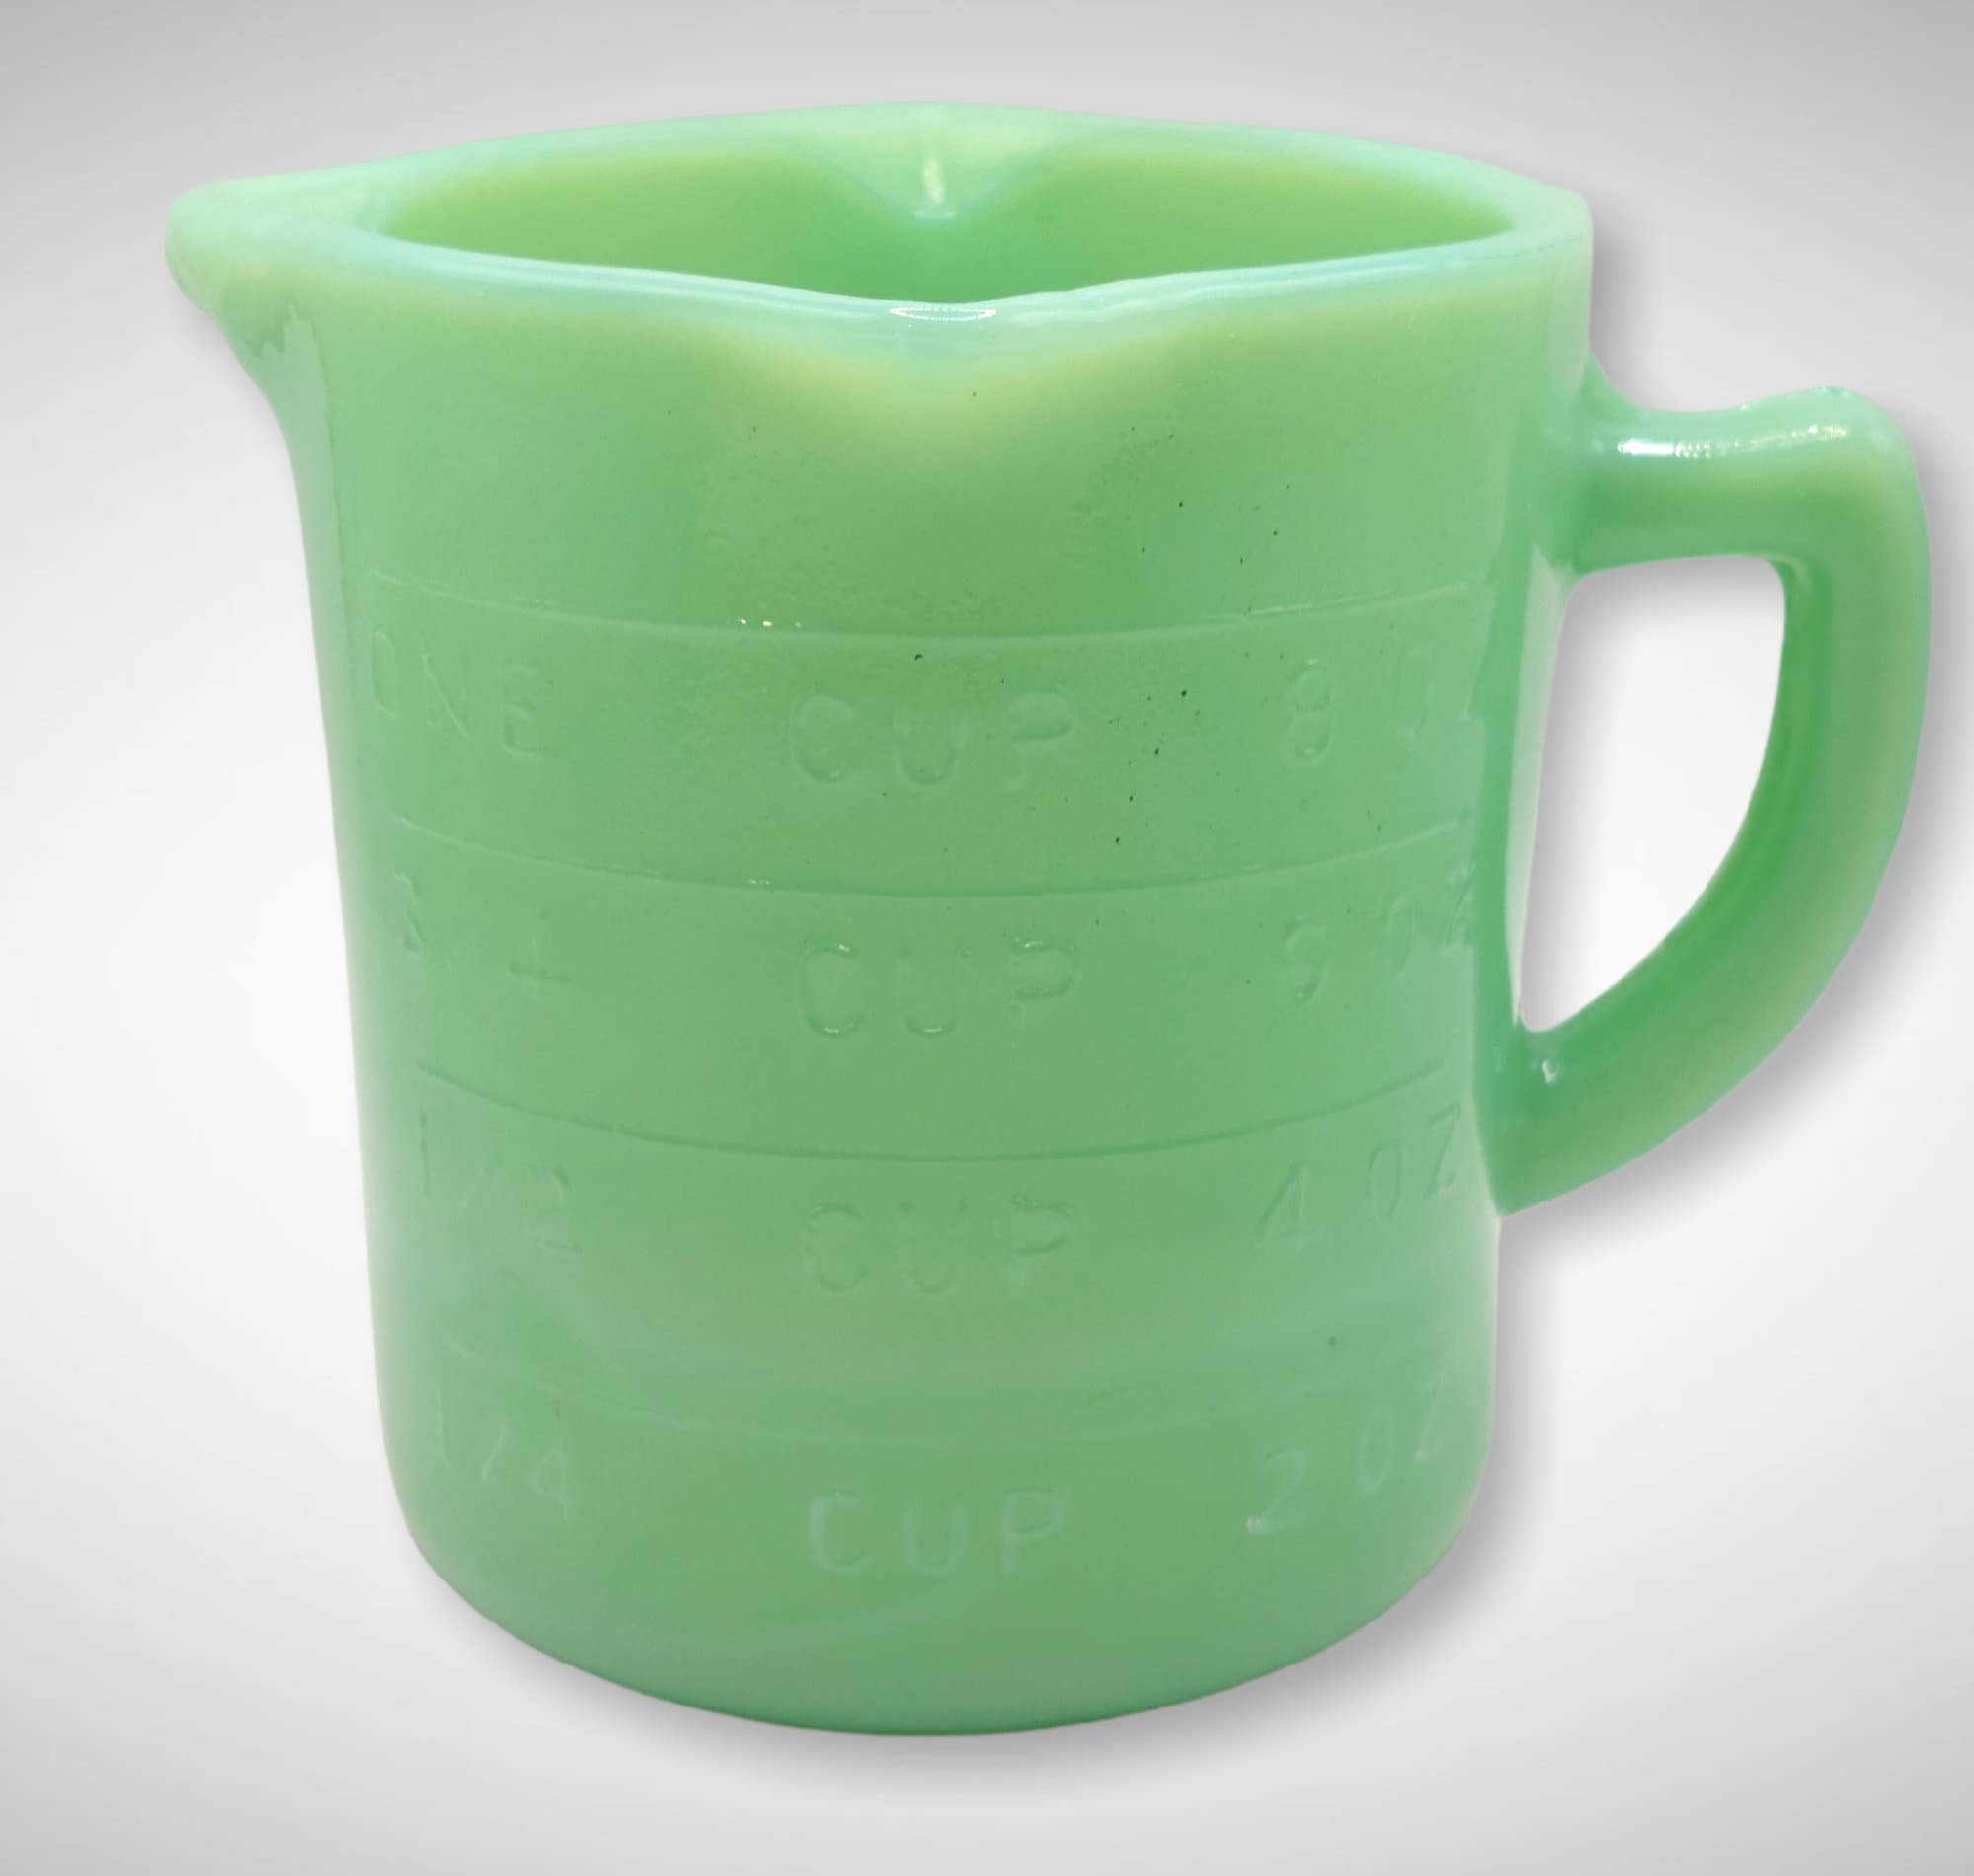 KitchenCraft Milk Glass Measuring Cup Set in Gift Box, Jade Green